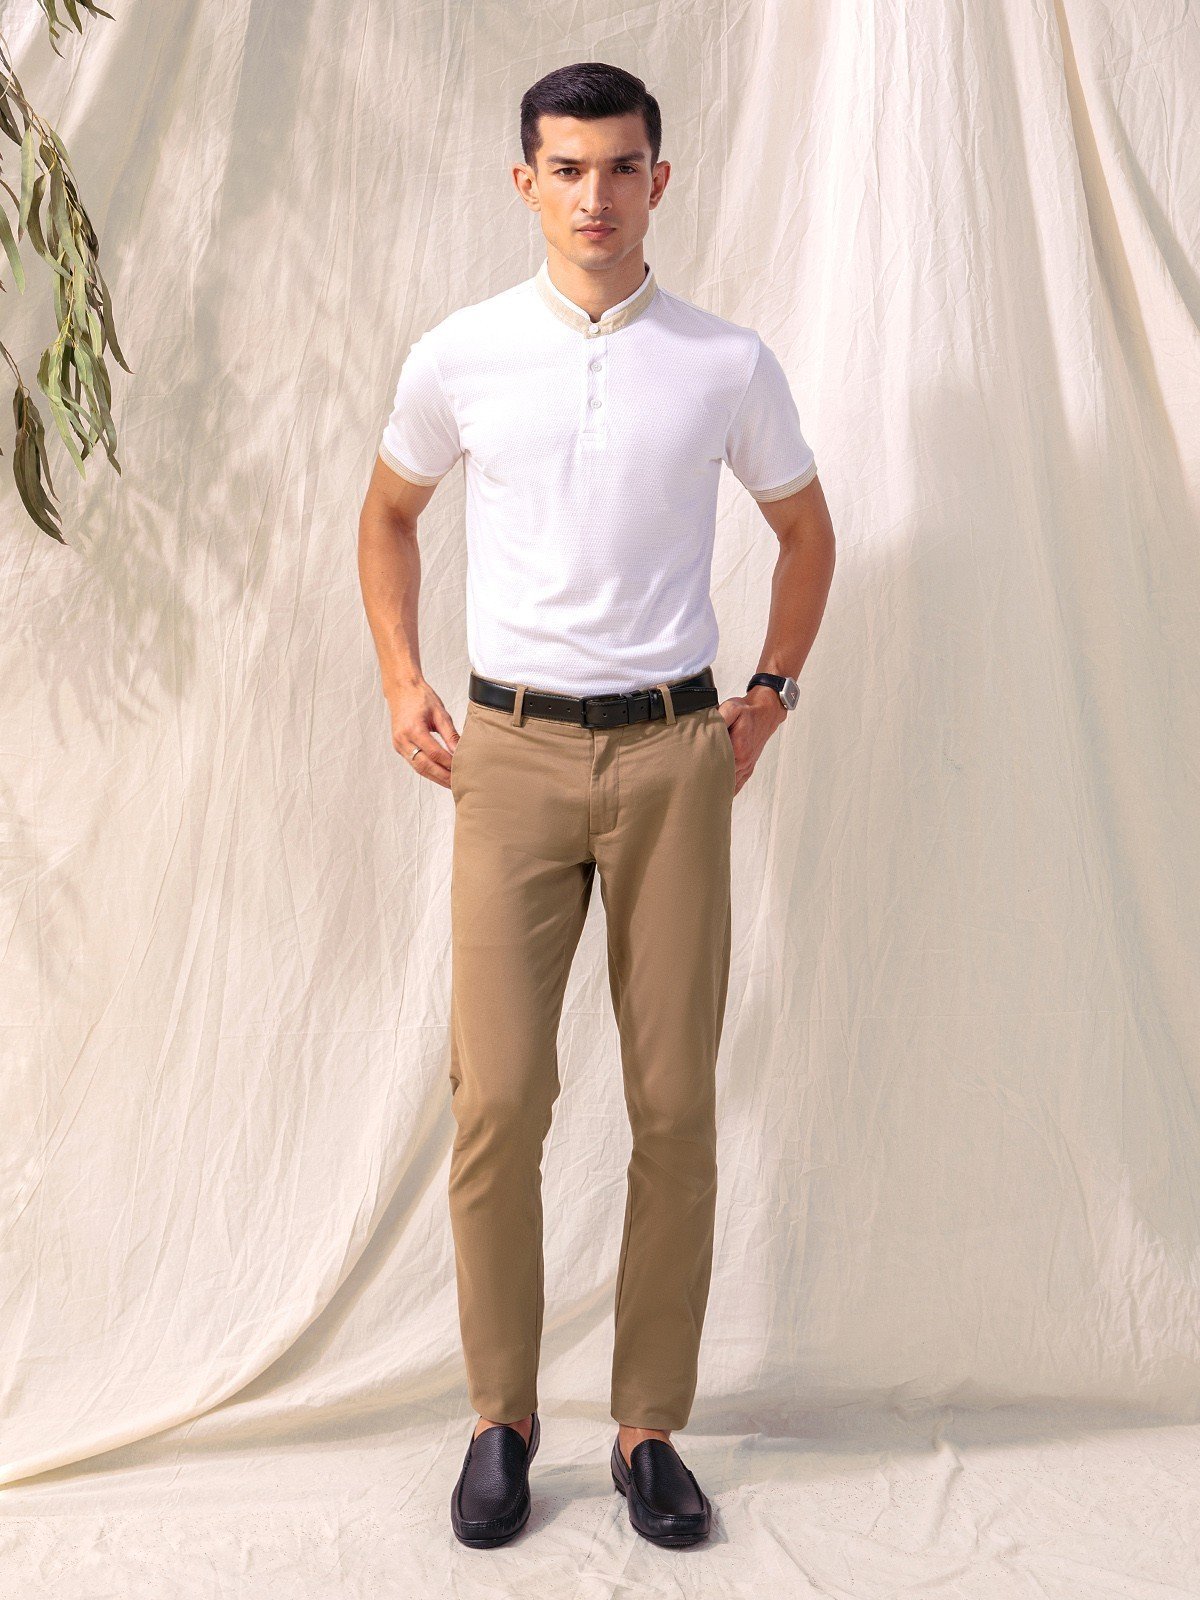 Men's White Polo Shirt - EMTPS23-039